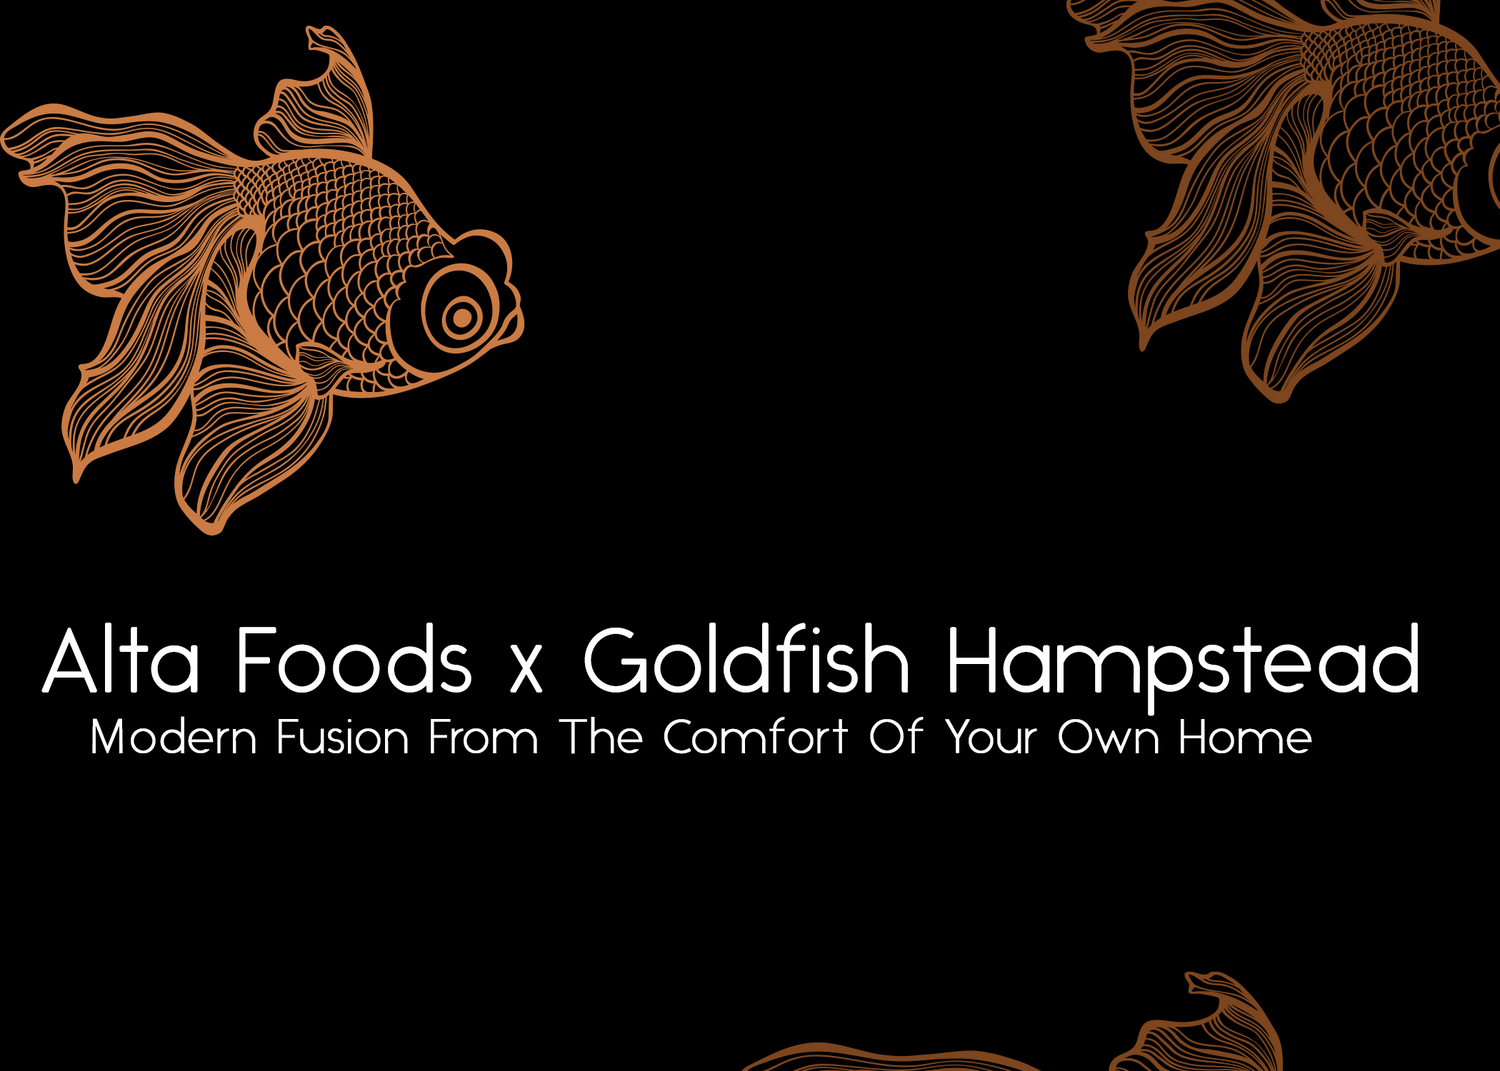 Goldfish Hampstead